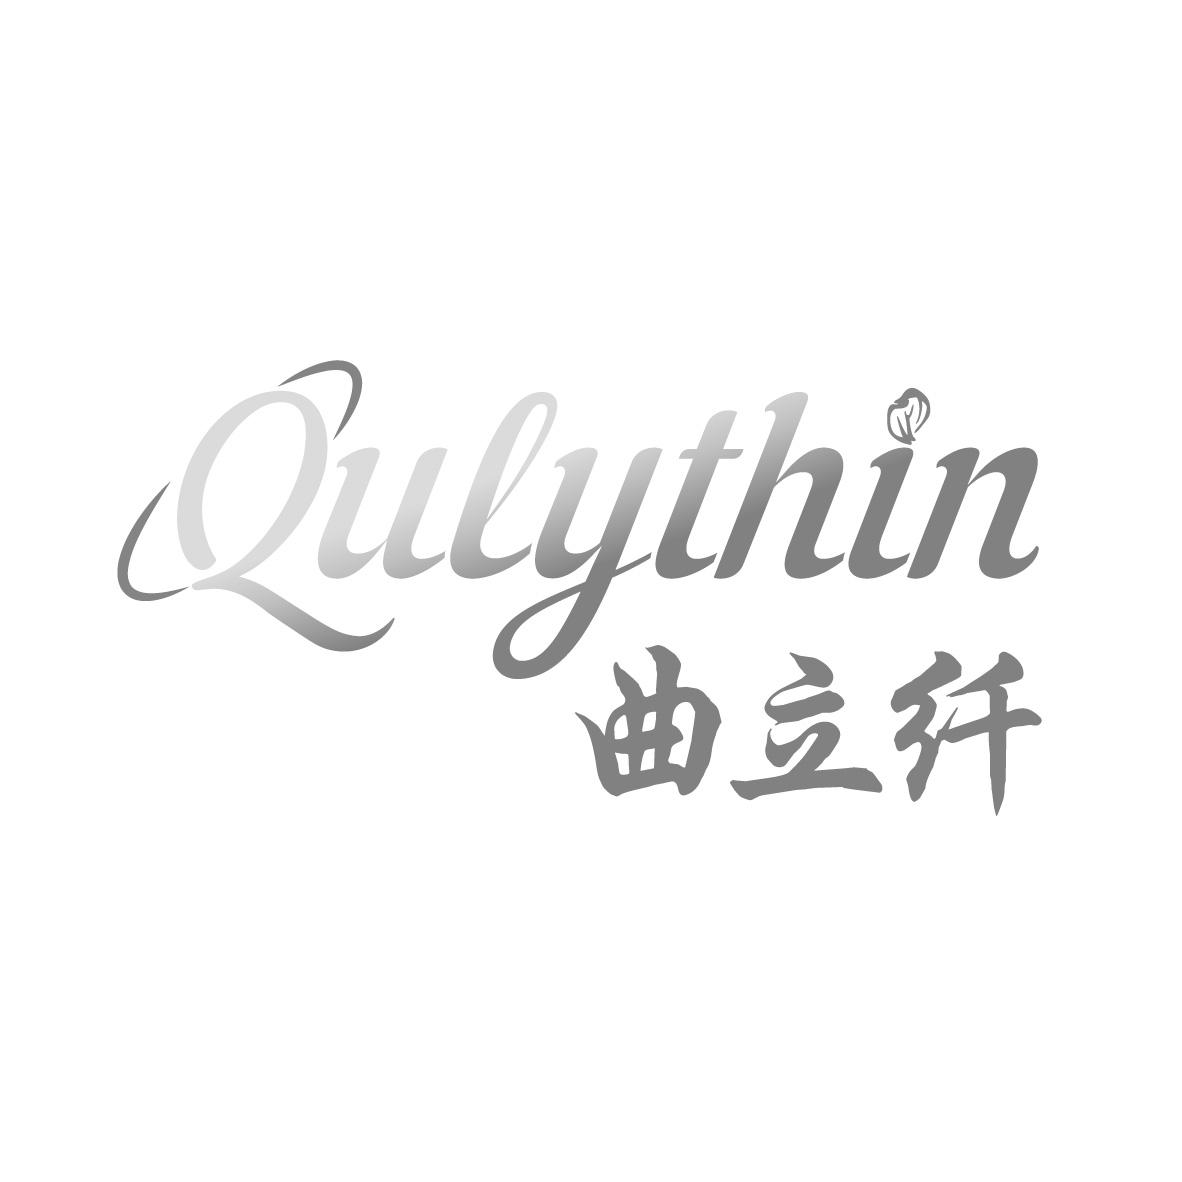  QULYTHIN